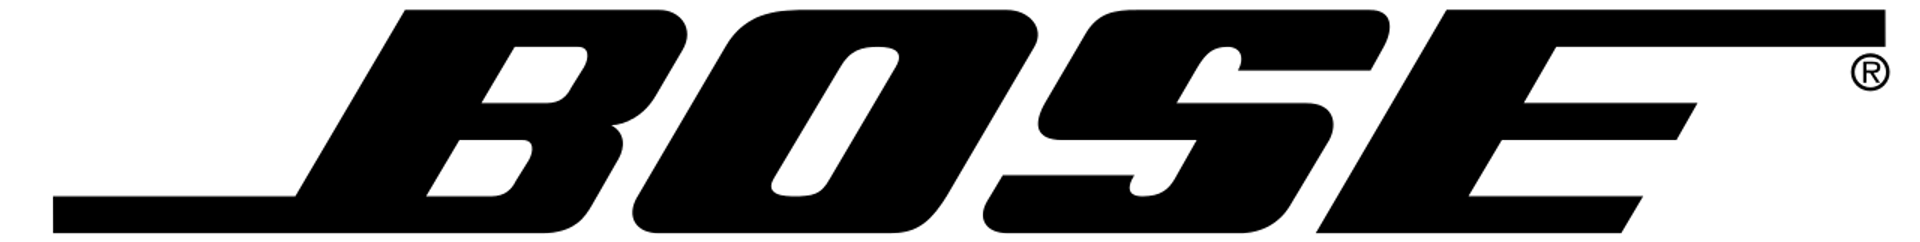 BOSE logo die aktuell Flugblatt